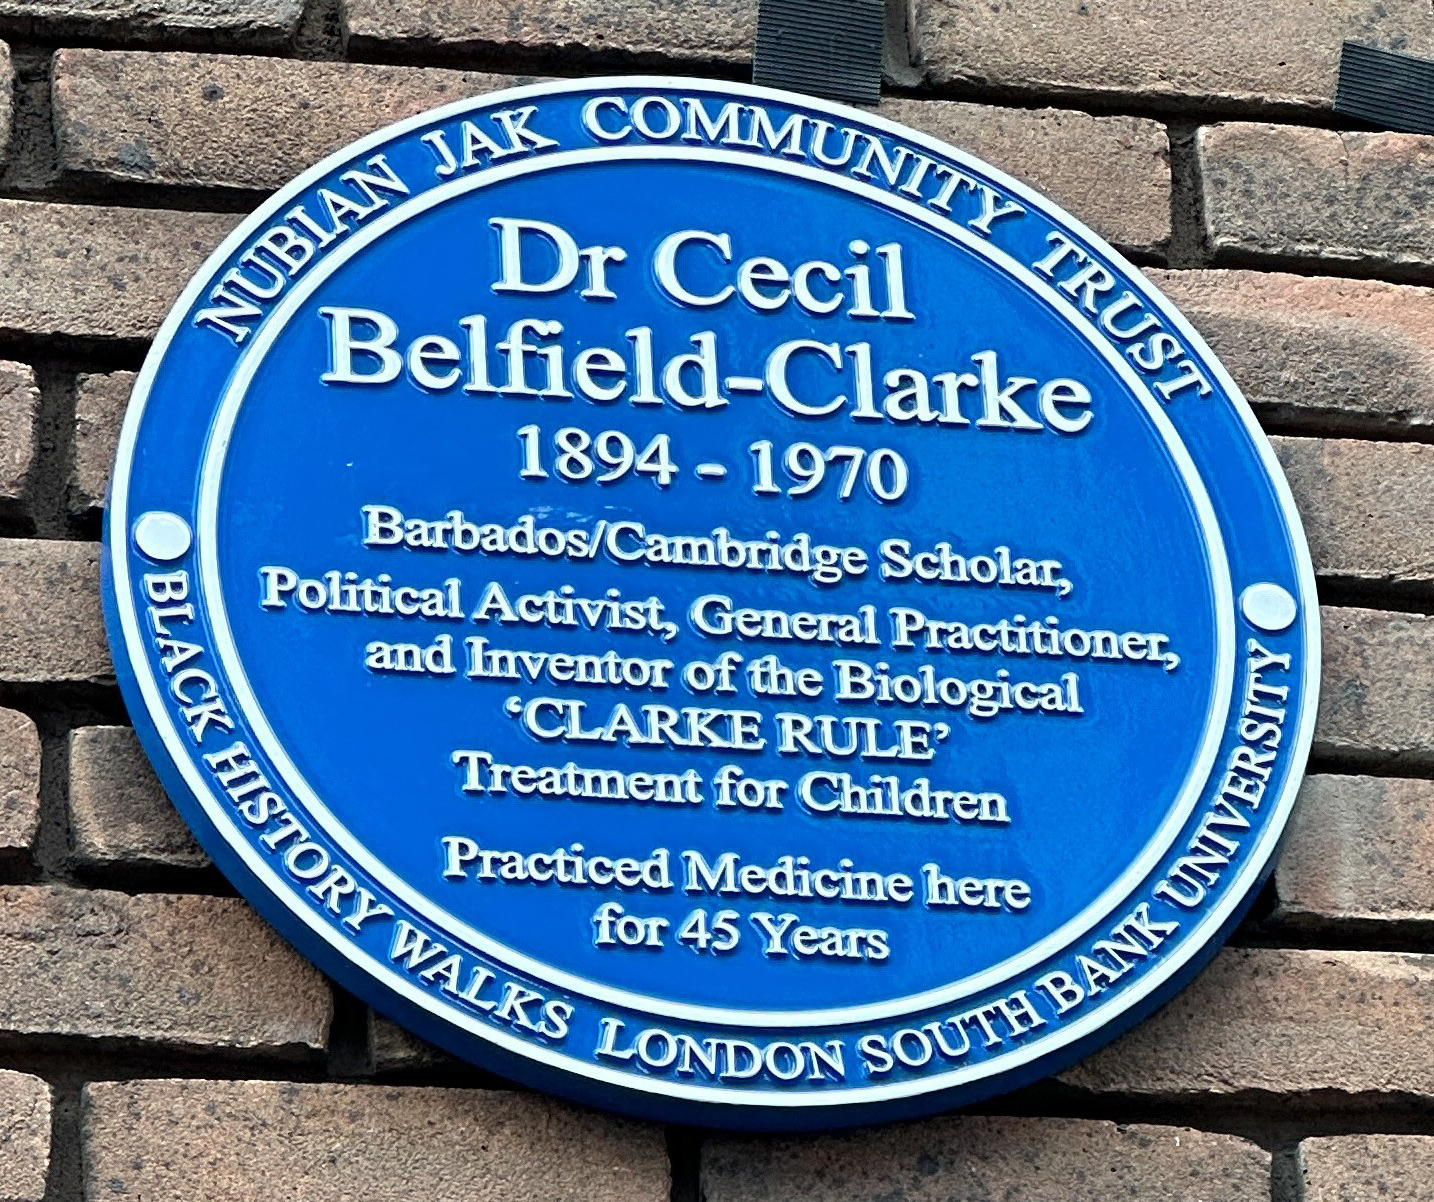 Nubian Jak and Black History Walks Blue Plaque Commemorating Dr Cecil Belfield-Clarke 